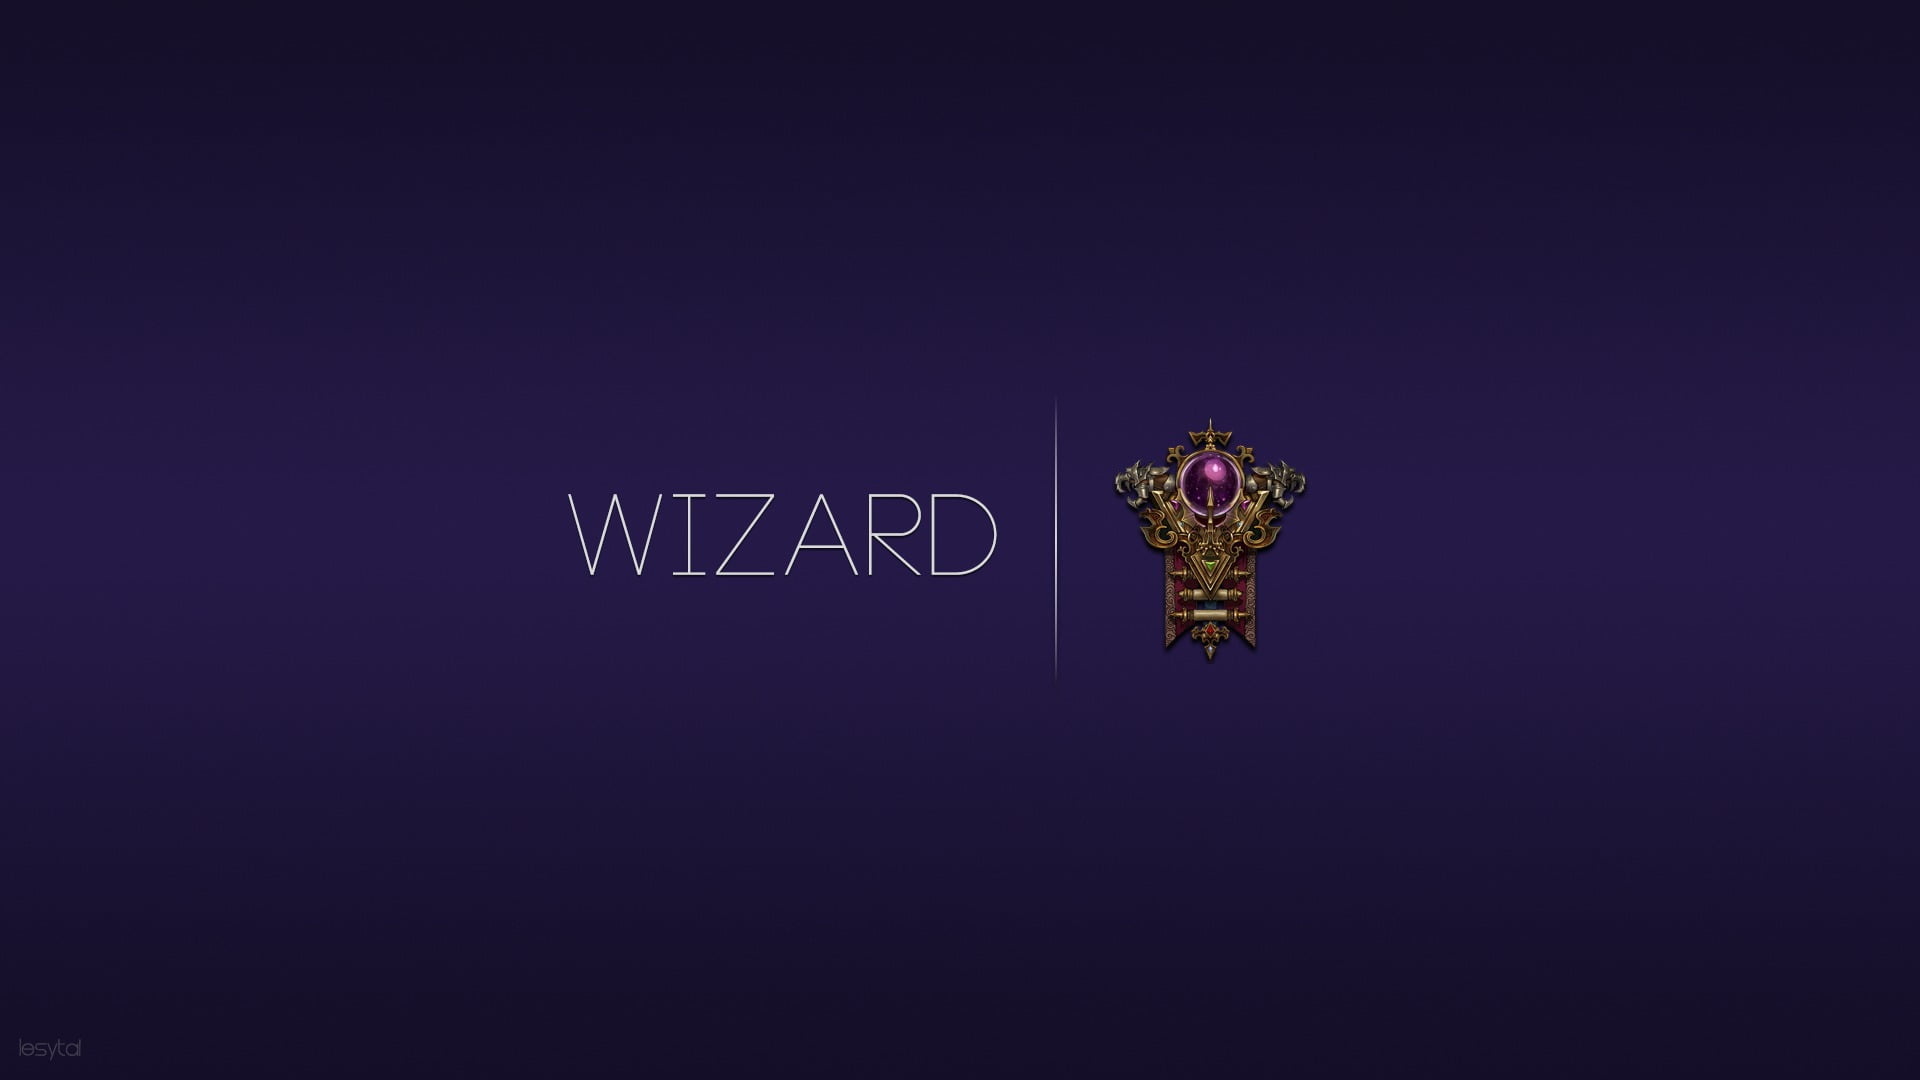 Wizard logo game graphics, Diablo III, classes, video game characters